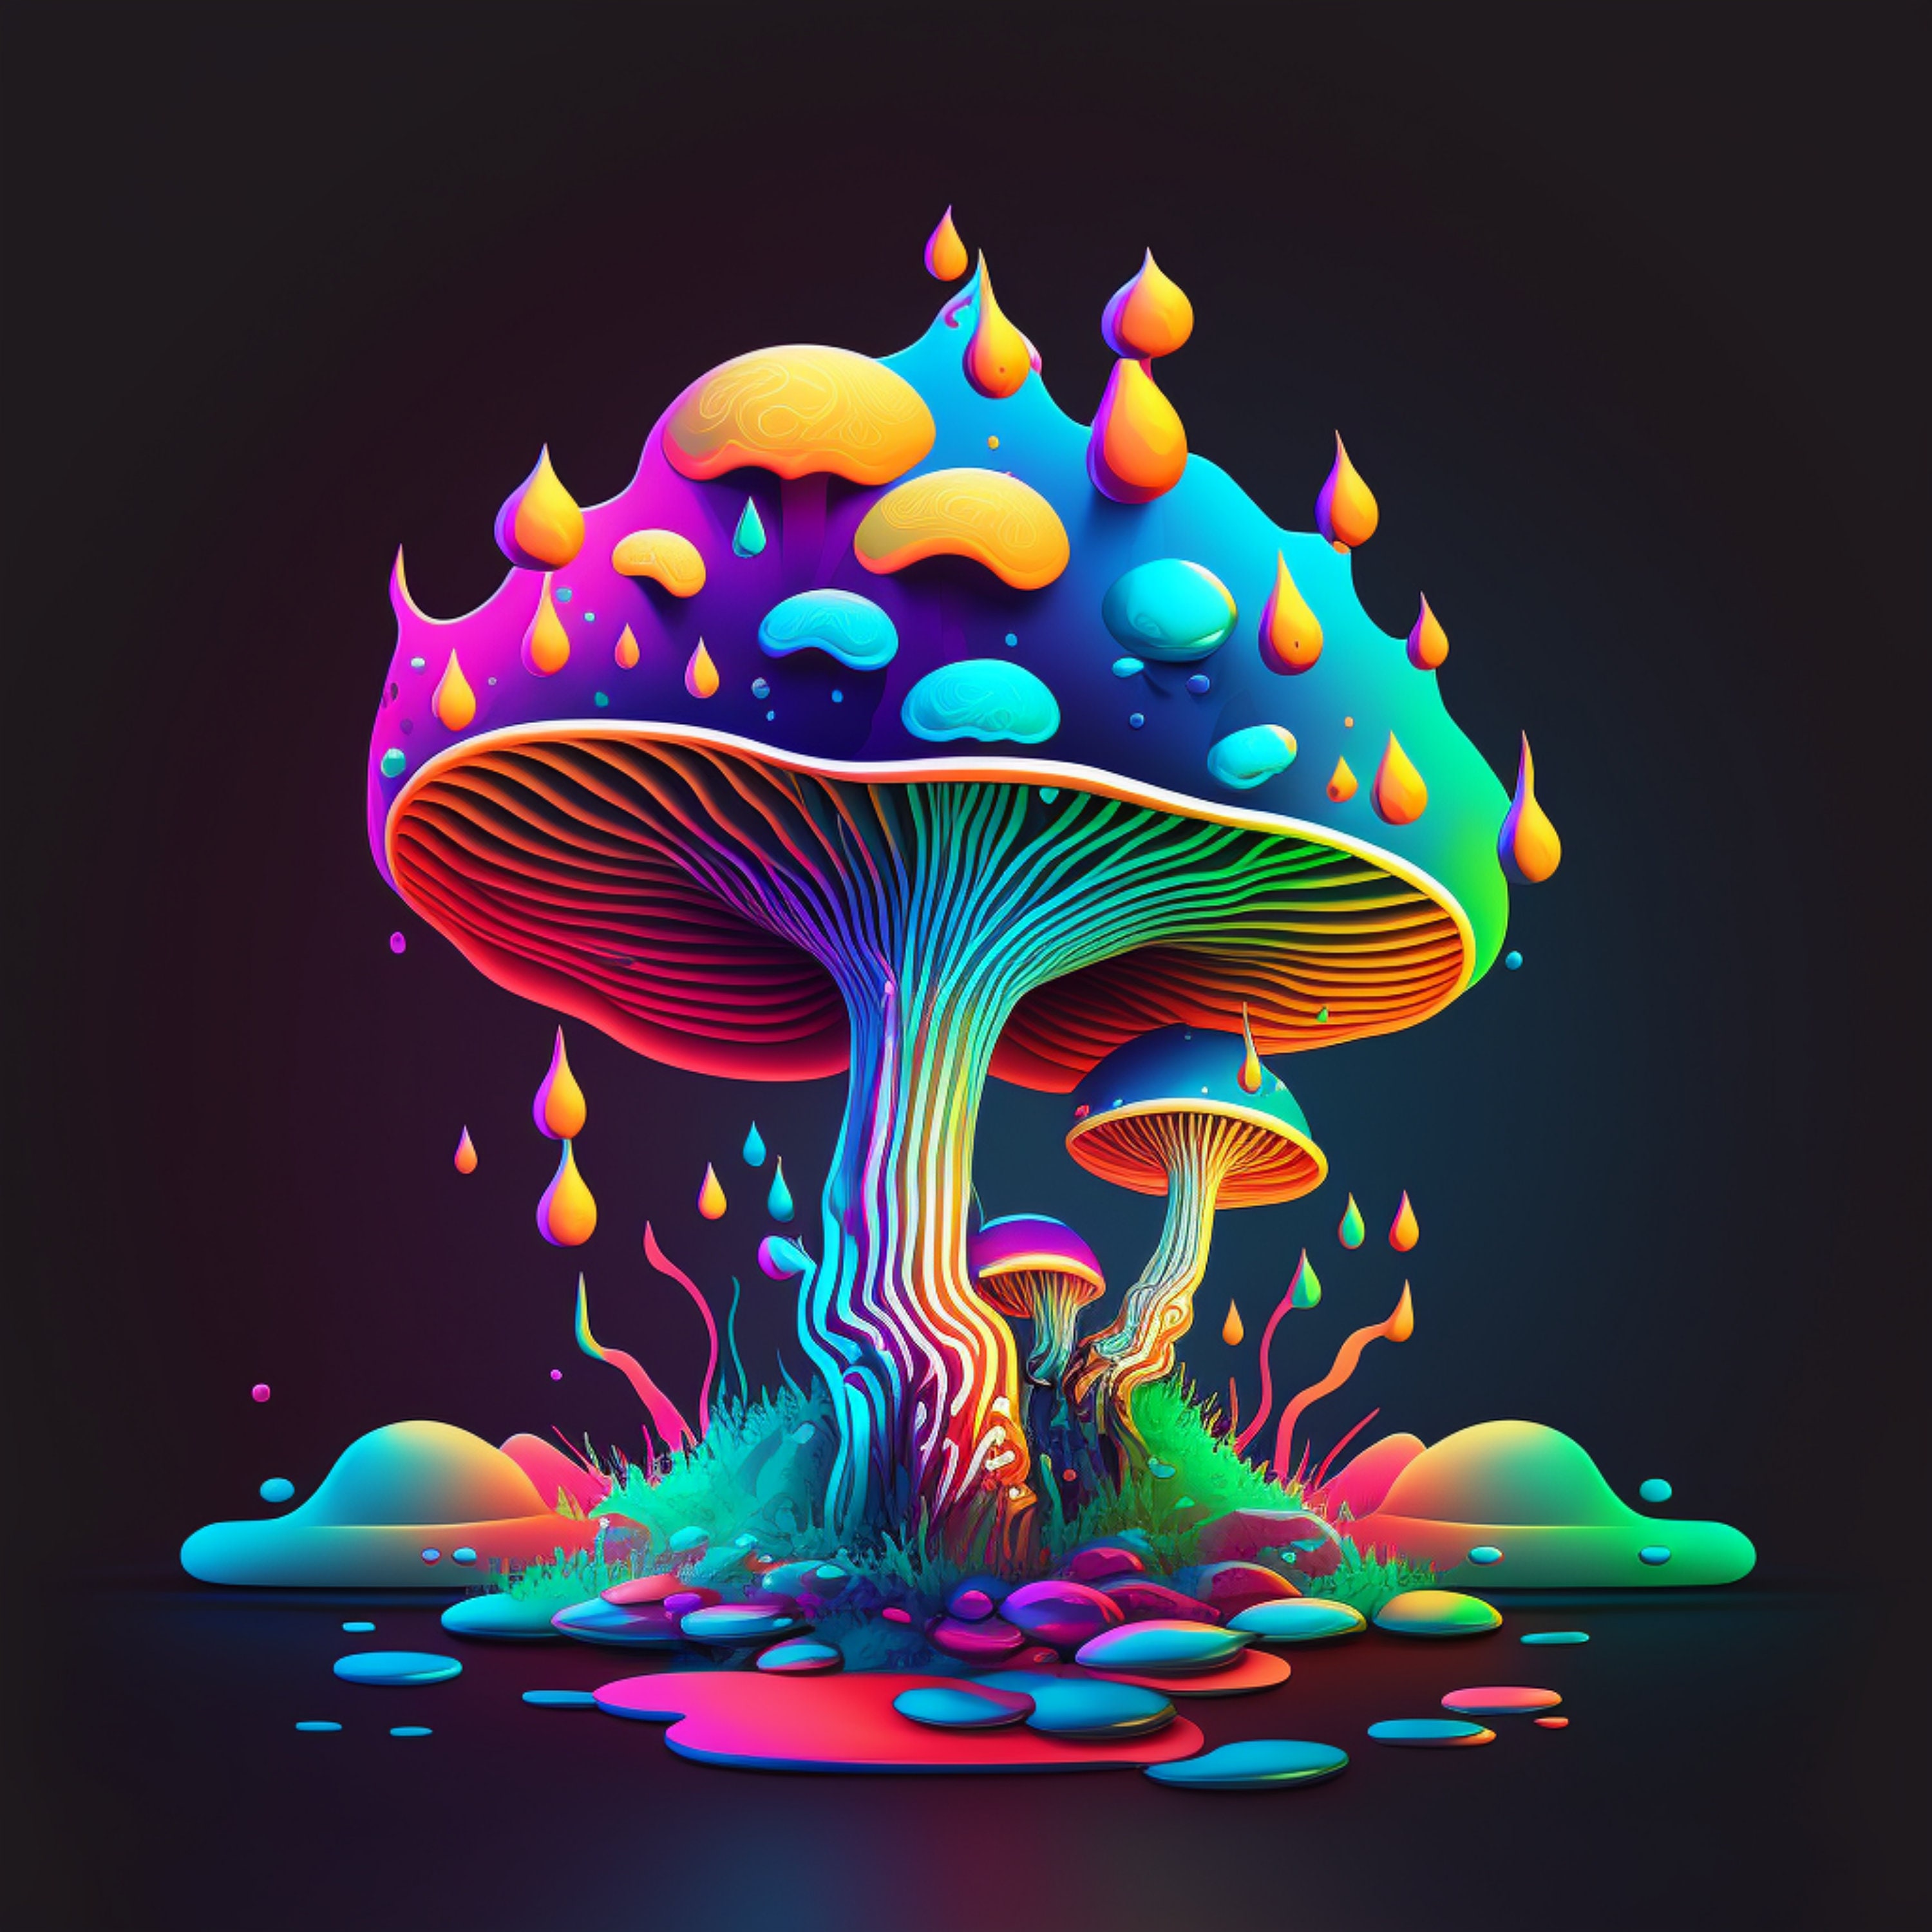 Neon Digital Mushroom (Download Now) - Etsy